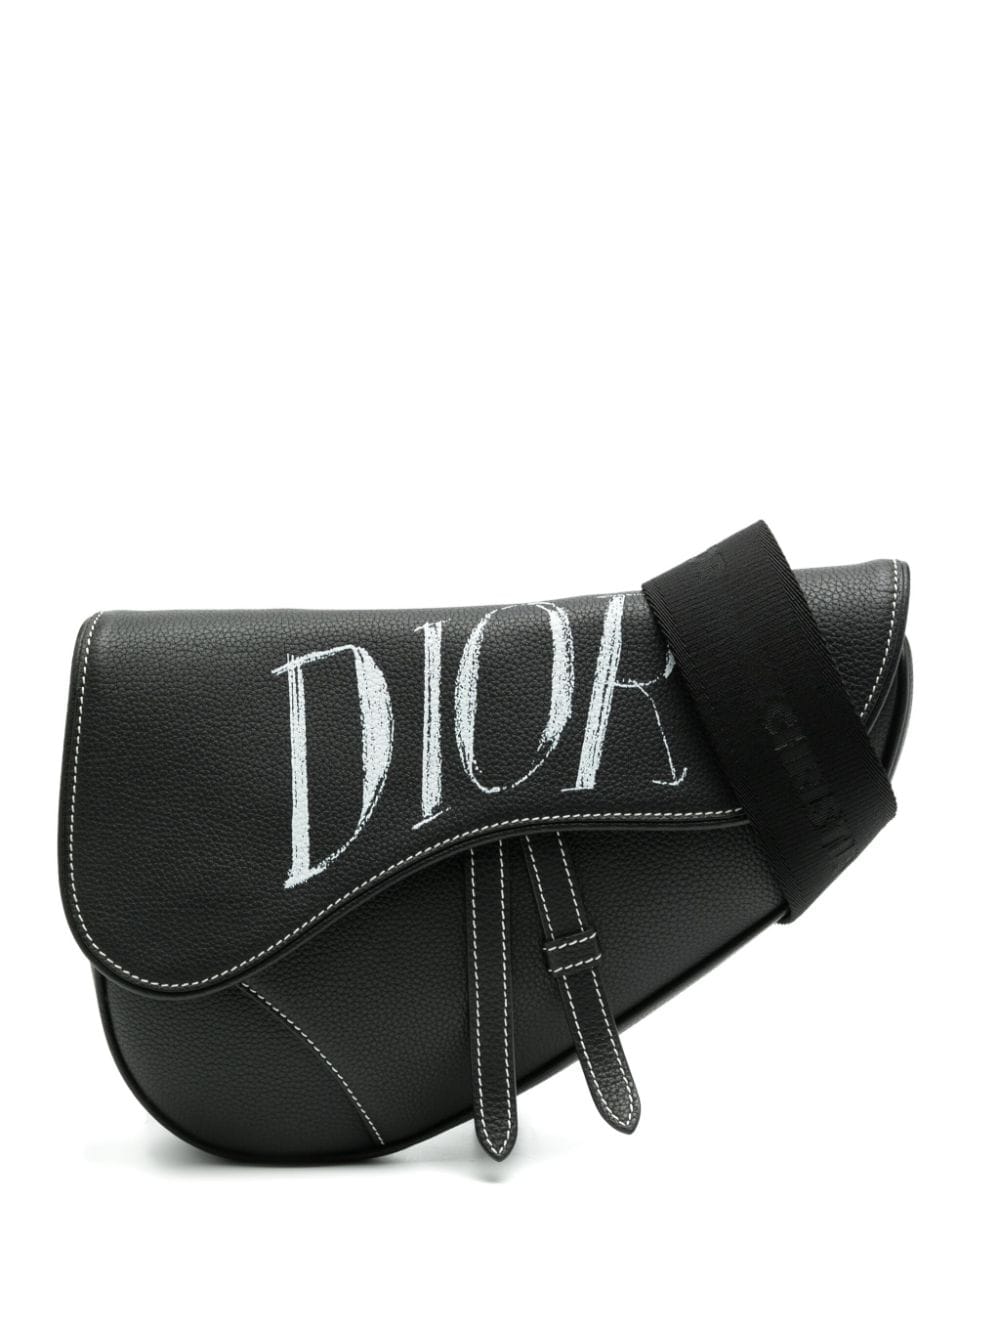 Christian Dior Pre-Owned x Alex Foxton 2020 Saddle shoulder bag - Black von Christian Dior Pre-Owned